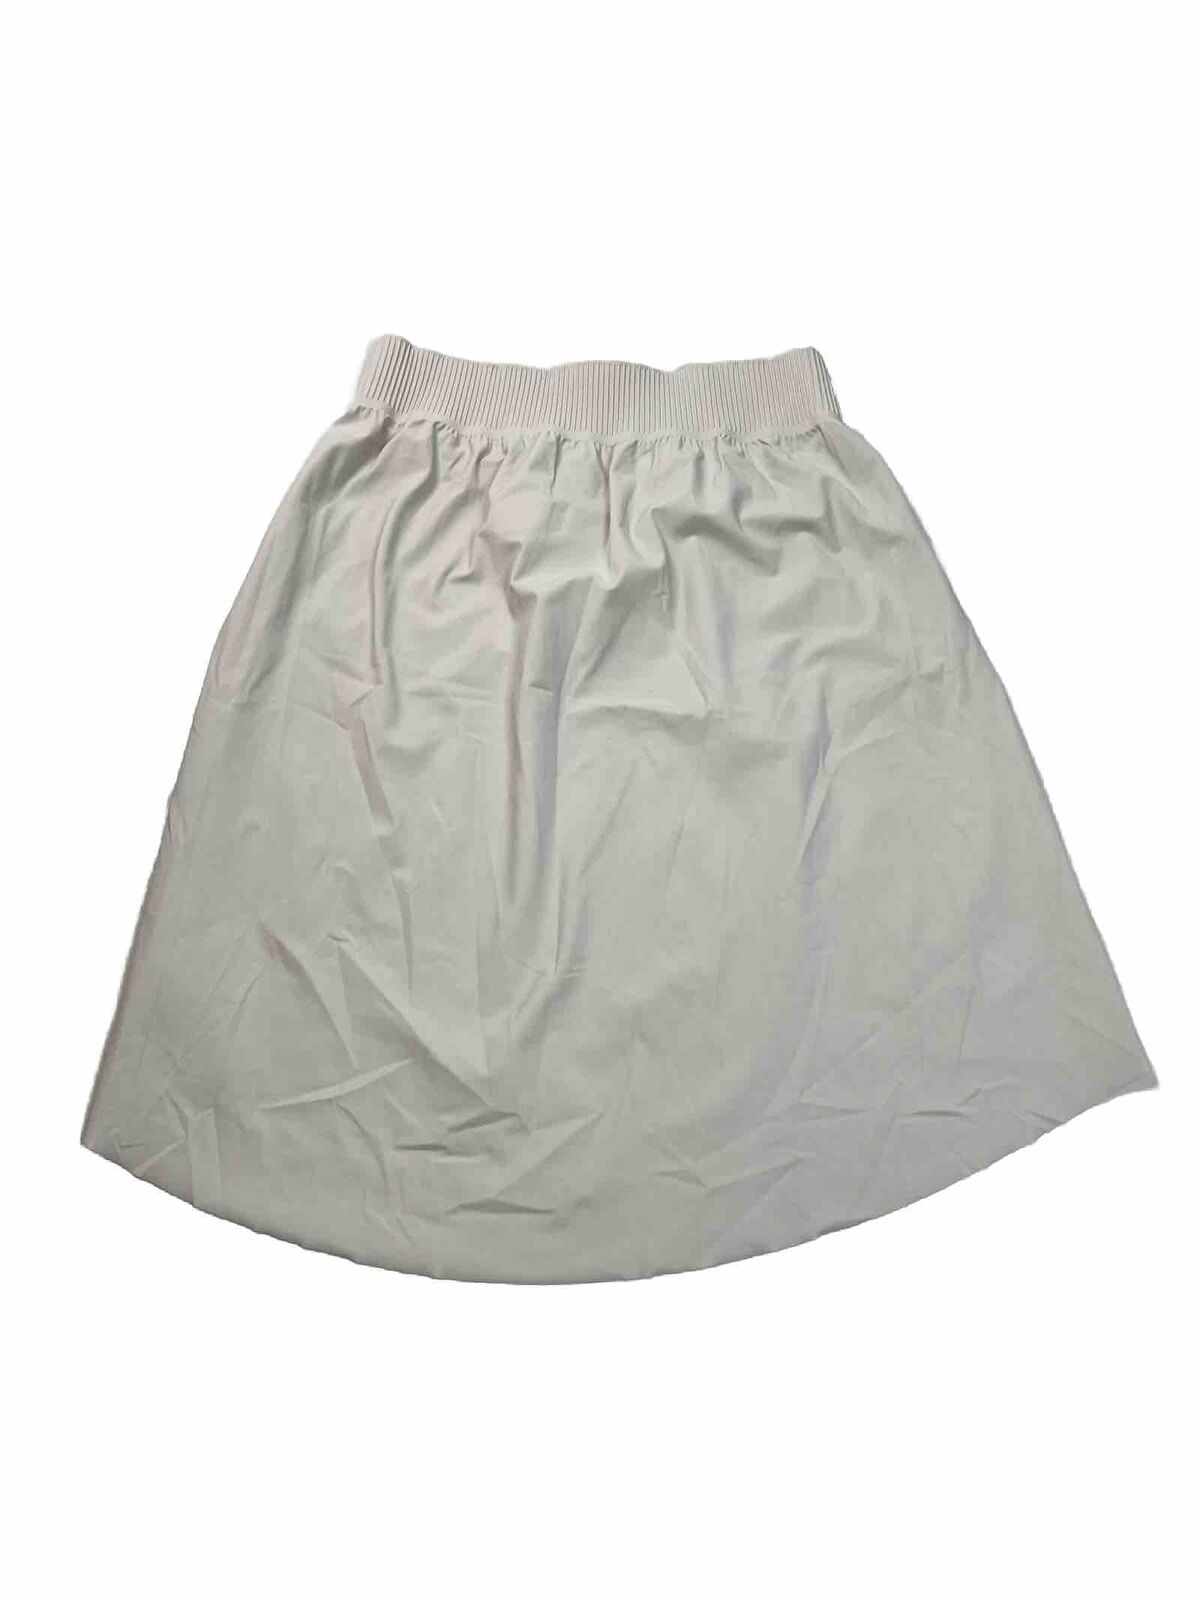 Athleta Women's Beige Unlined Cosmic Skirt with Pockets - M